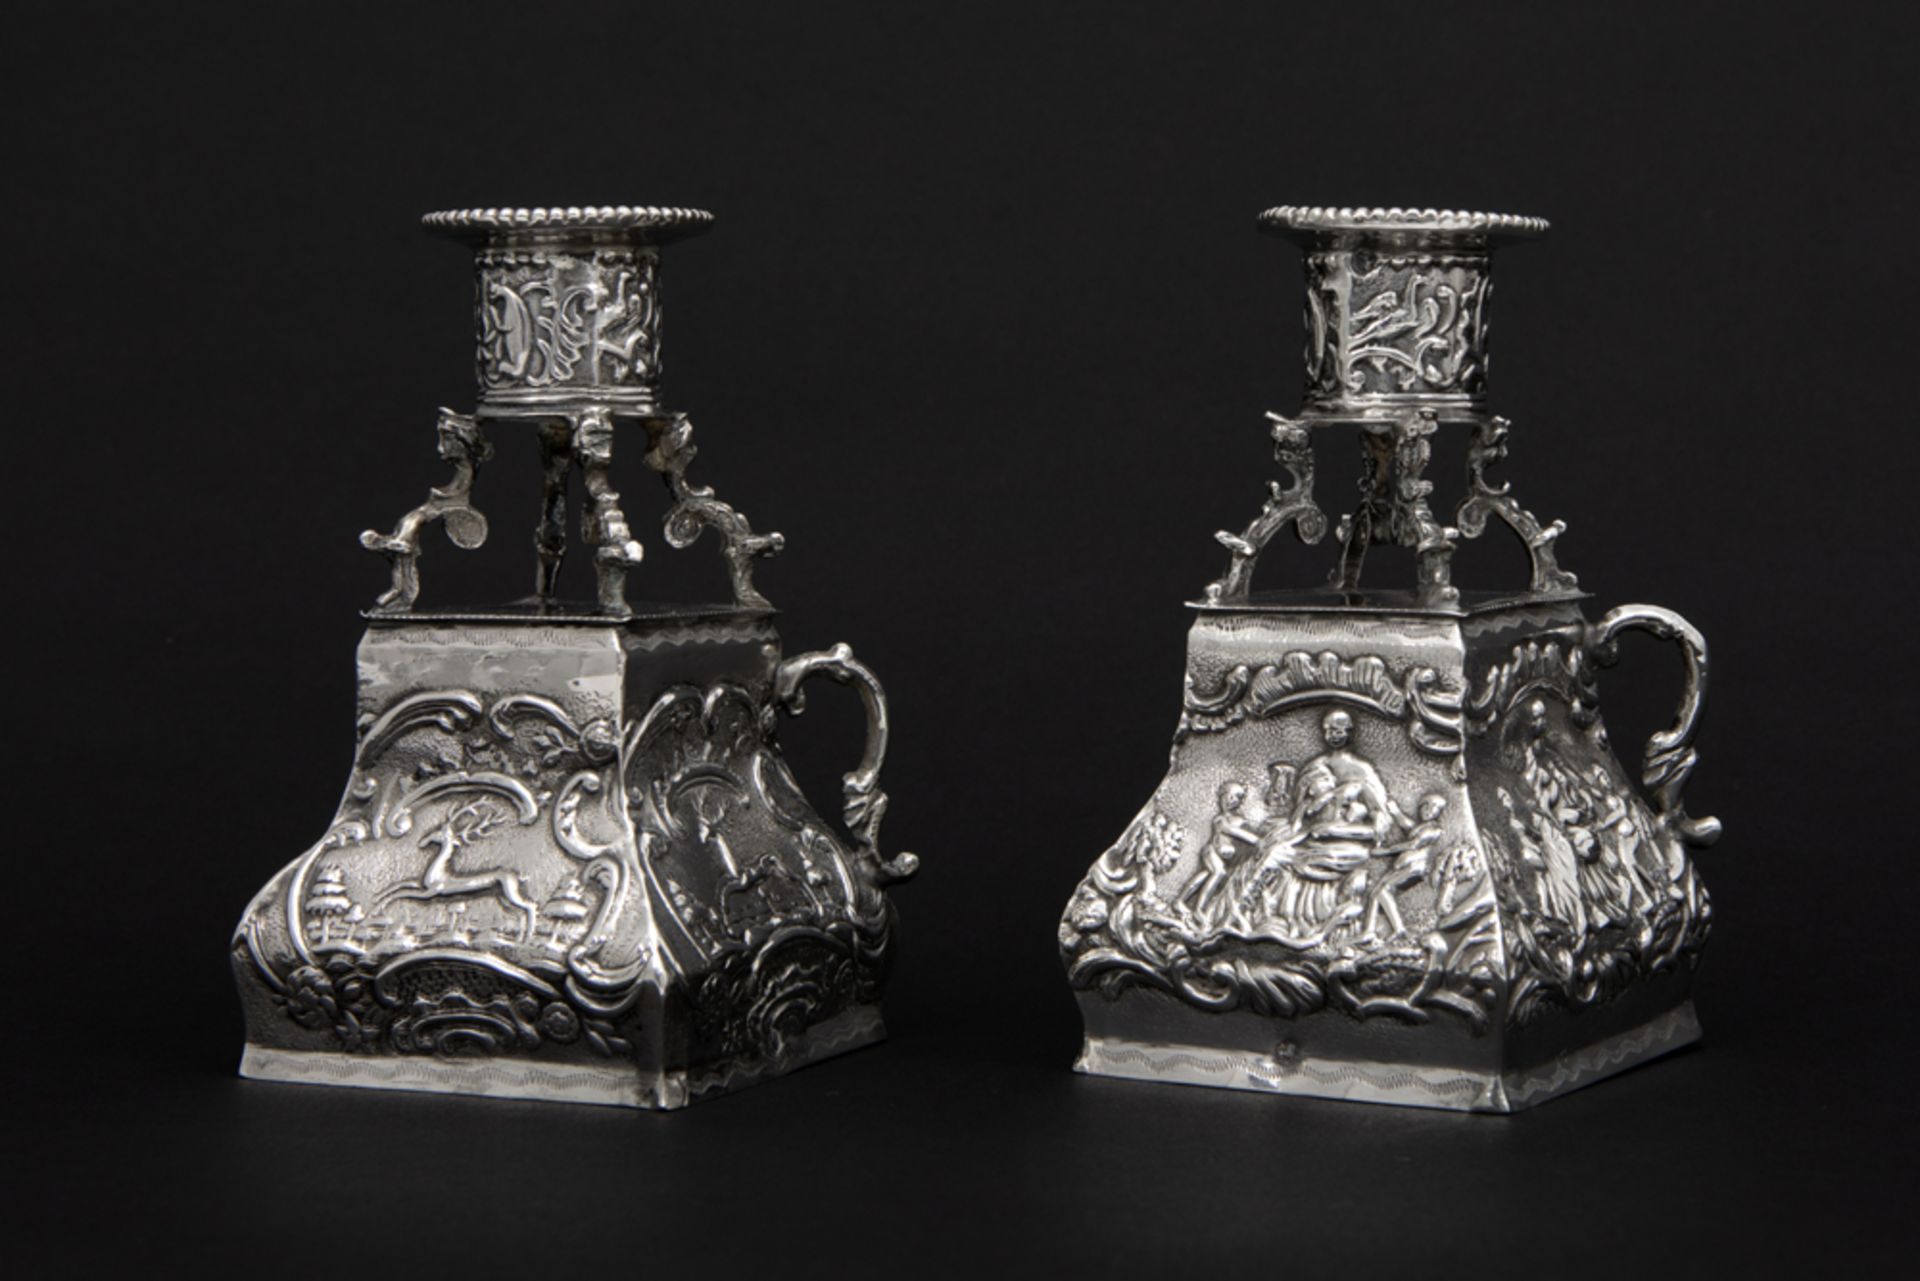 pair of small antique Dutch candlesticks in marked silver || Paar antieke Nederlandse